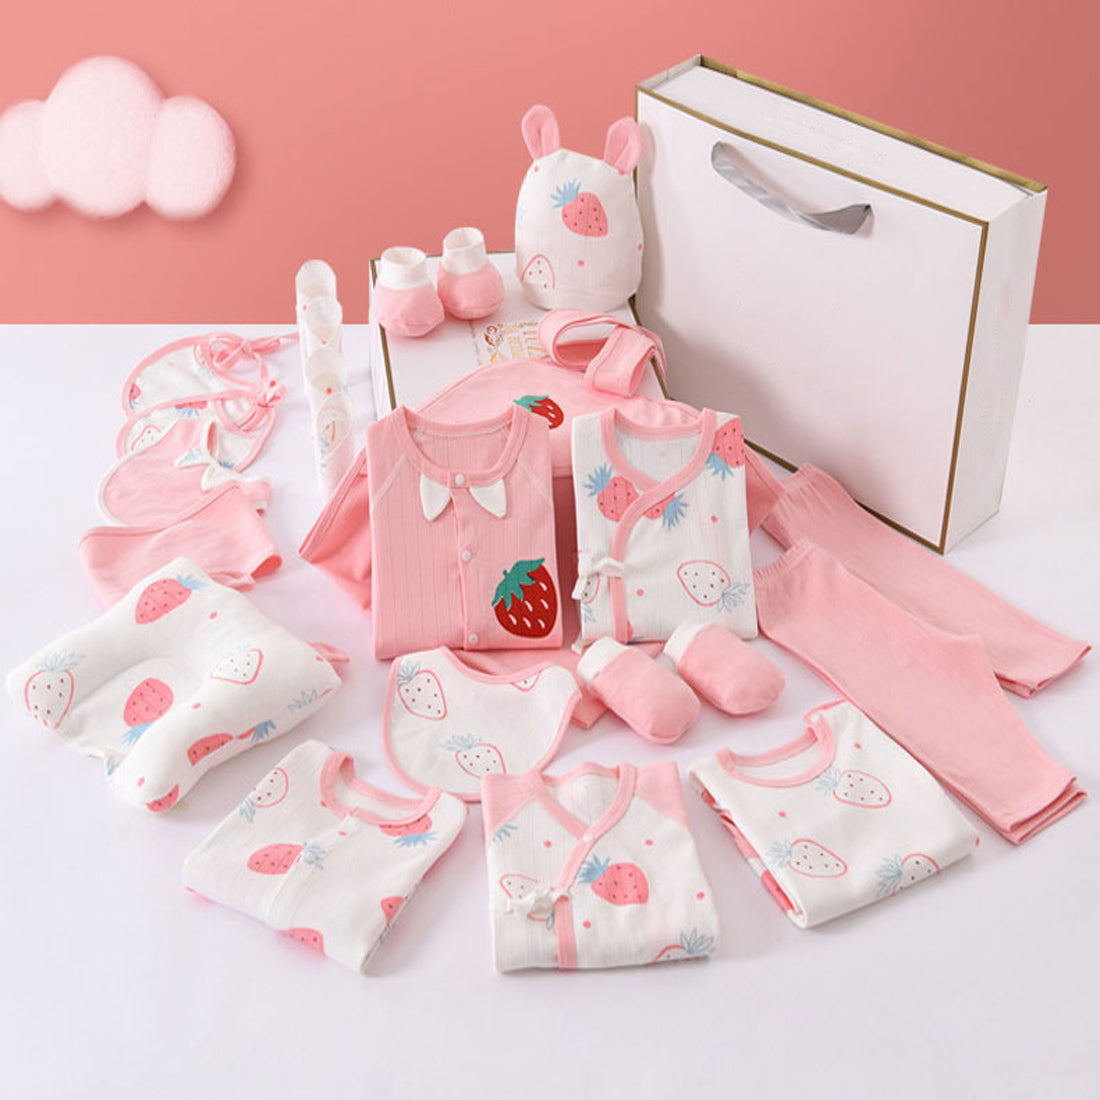 Little Surprise Box - 24 pcs Newly Born Baby Girl/Boy Gift Hamper (Strawberry Print) 0-6 Months